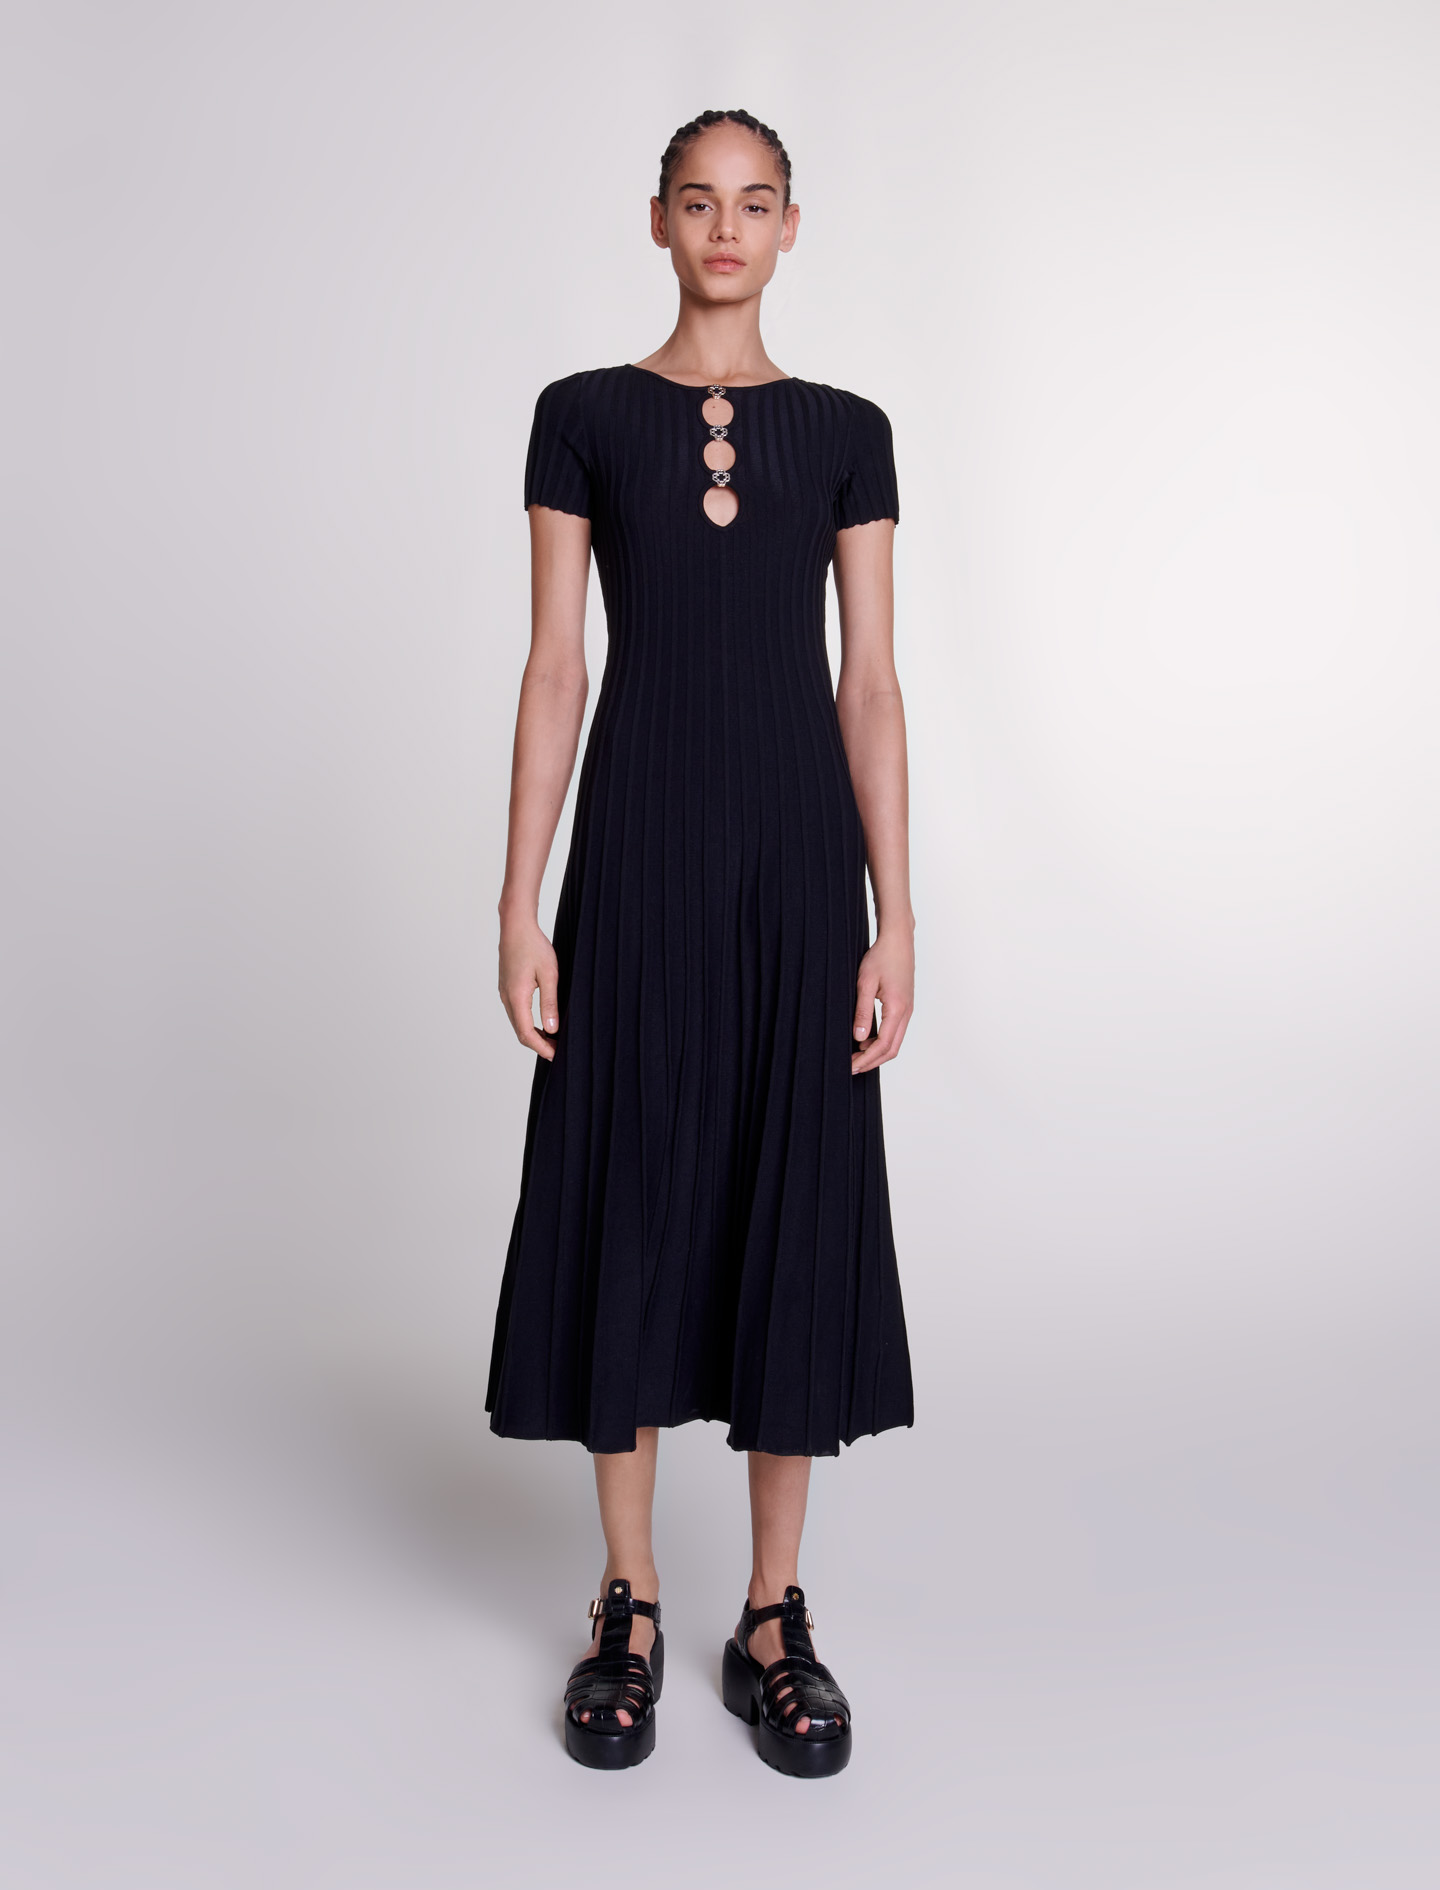 Maje Woman's viscose, Rib knit maxi dress for Spring/Summer, in color Black / Black